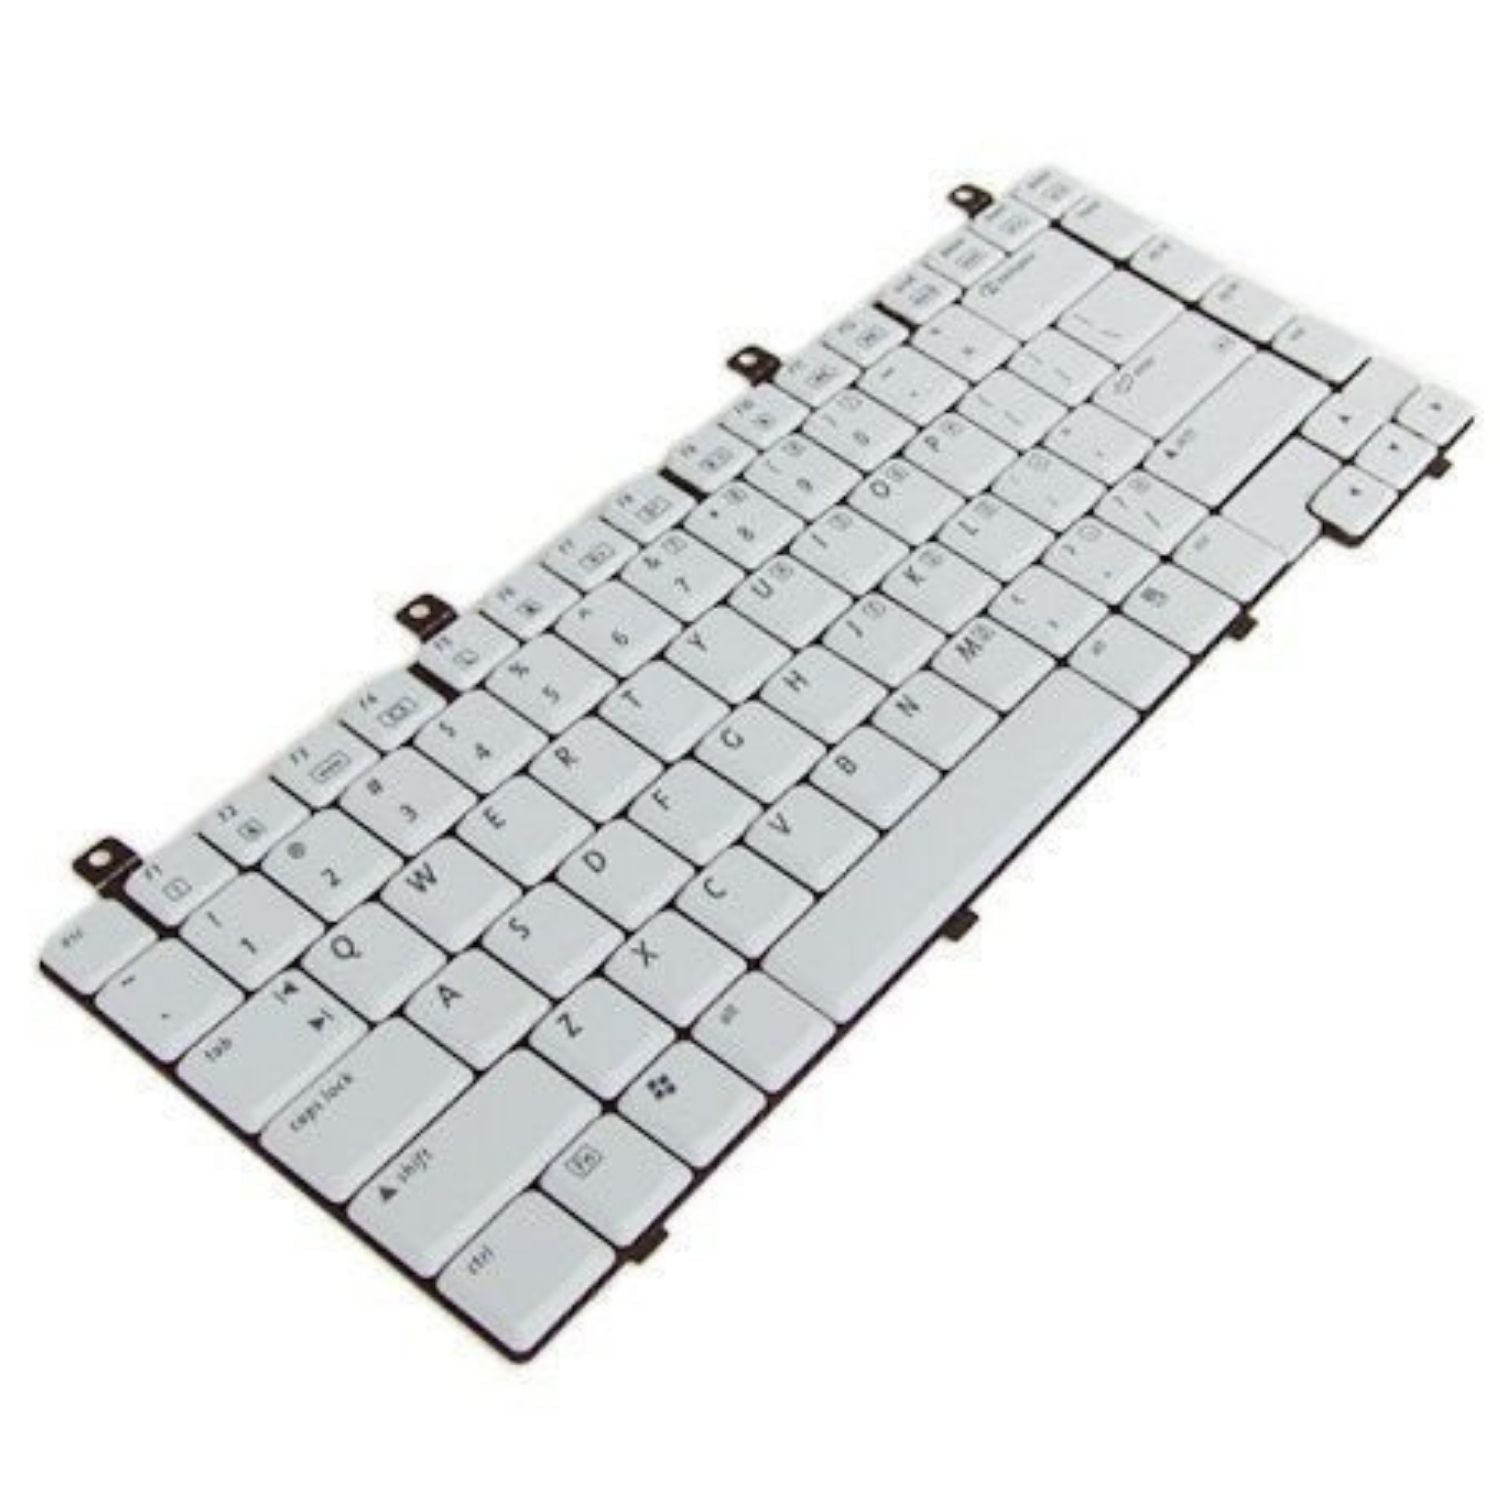 HP Laptop keyboard for Compaq Presario C300 C500 V5000 M2000 R4000 V2000 V2200 V2600 White